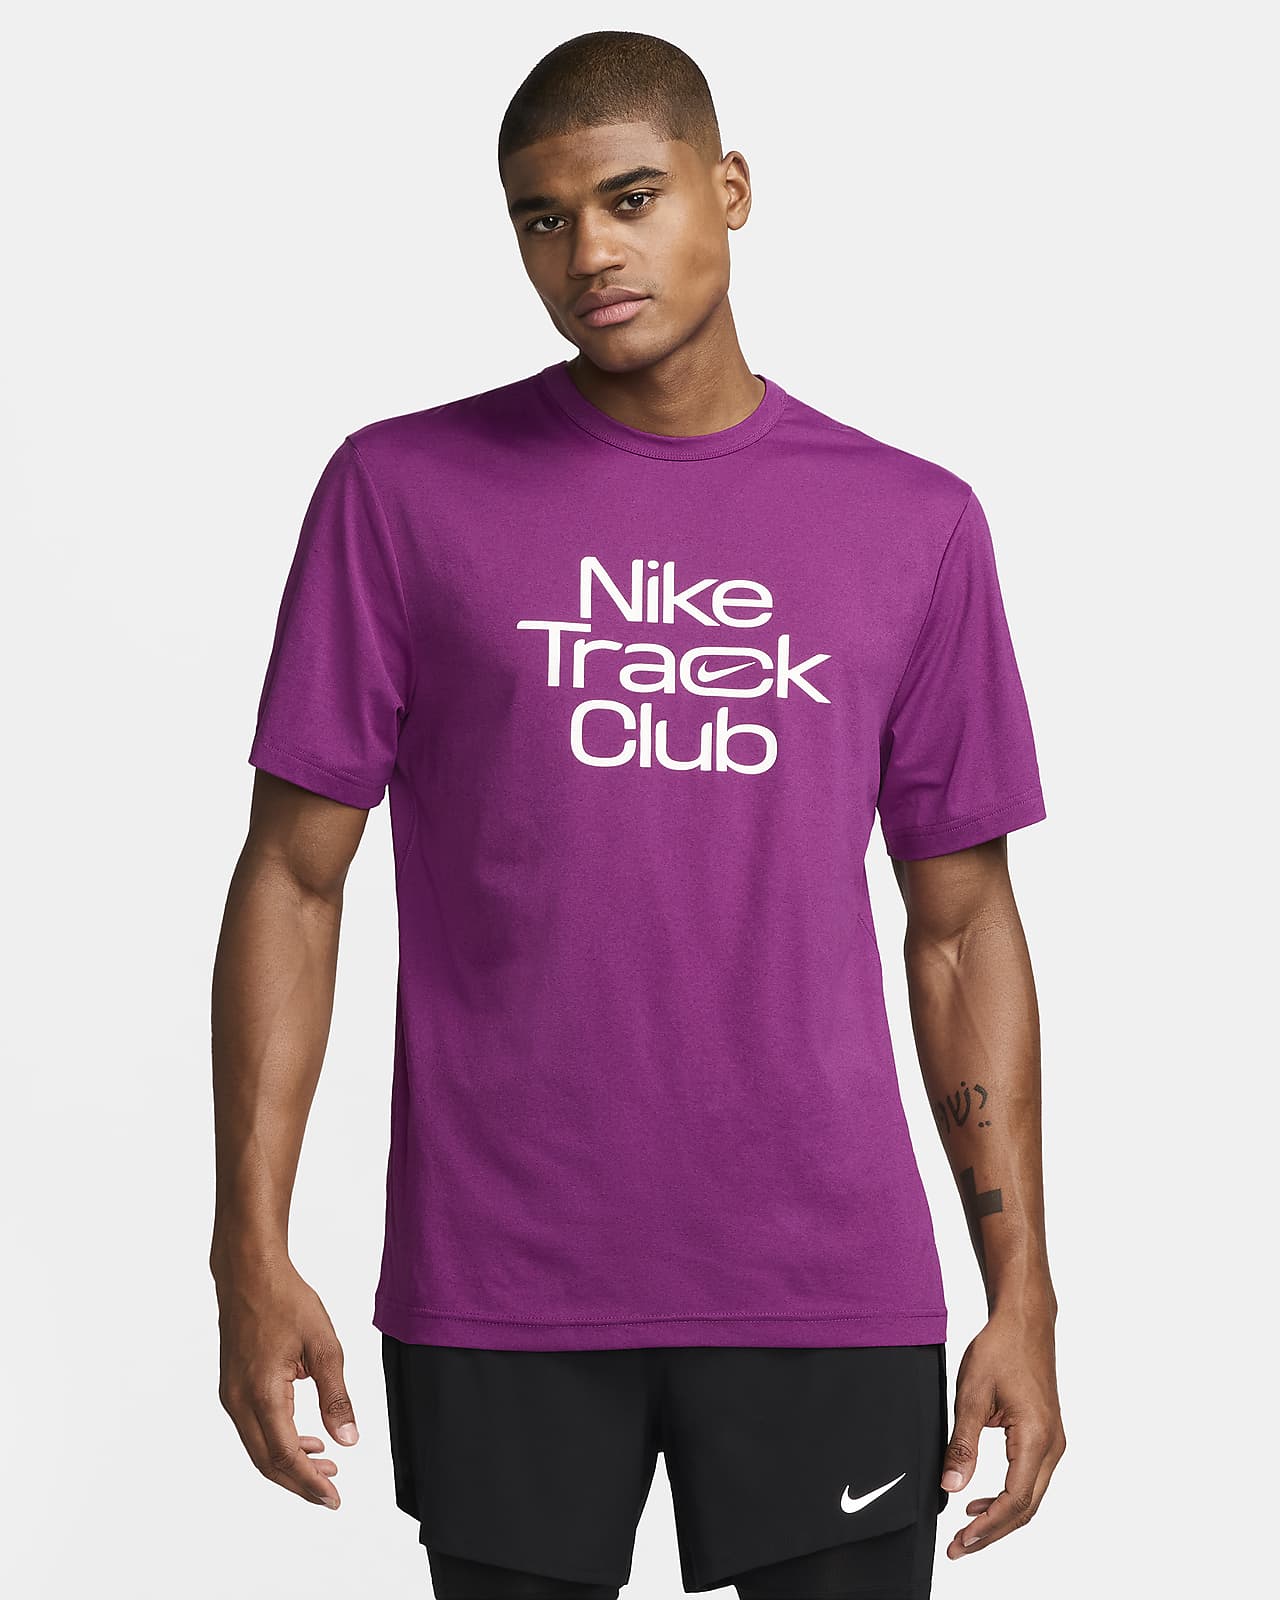 Kortärmad löpartröja Nike Track Club Dri-FIT för män